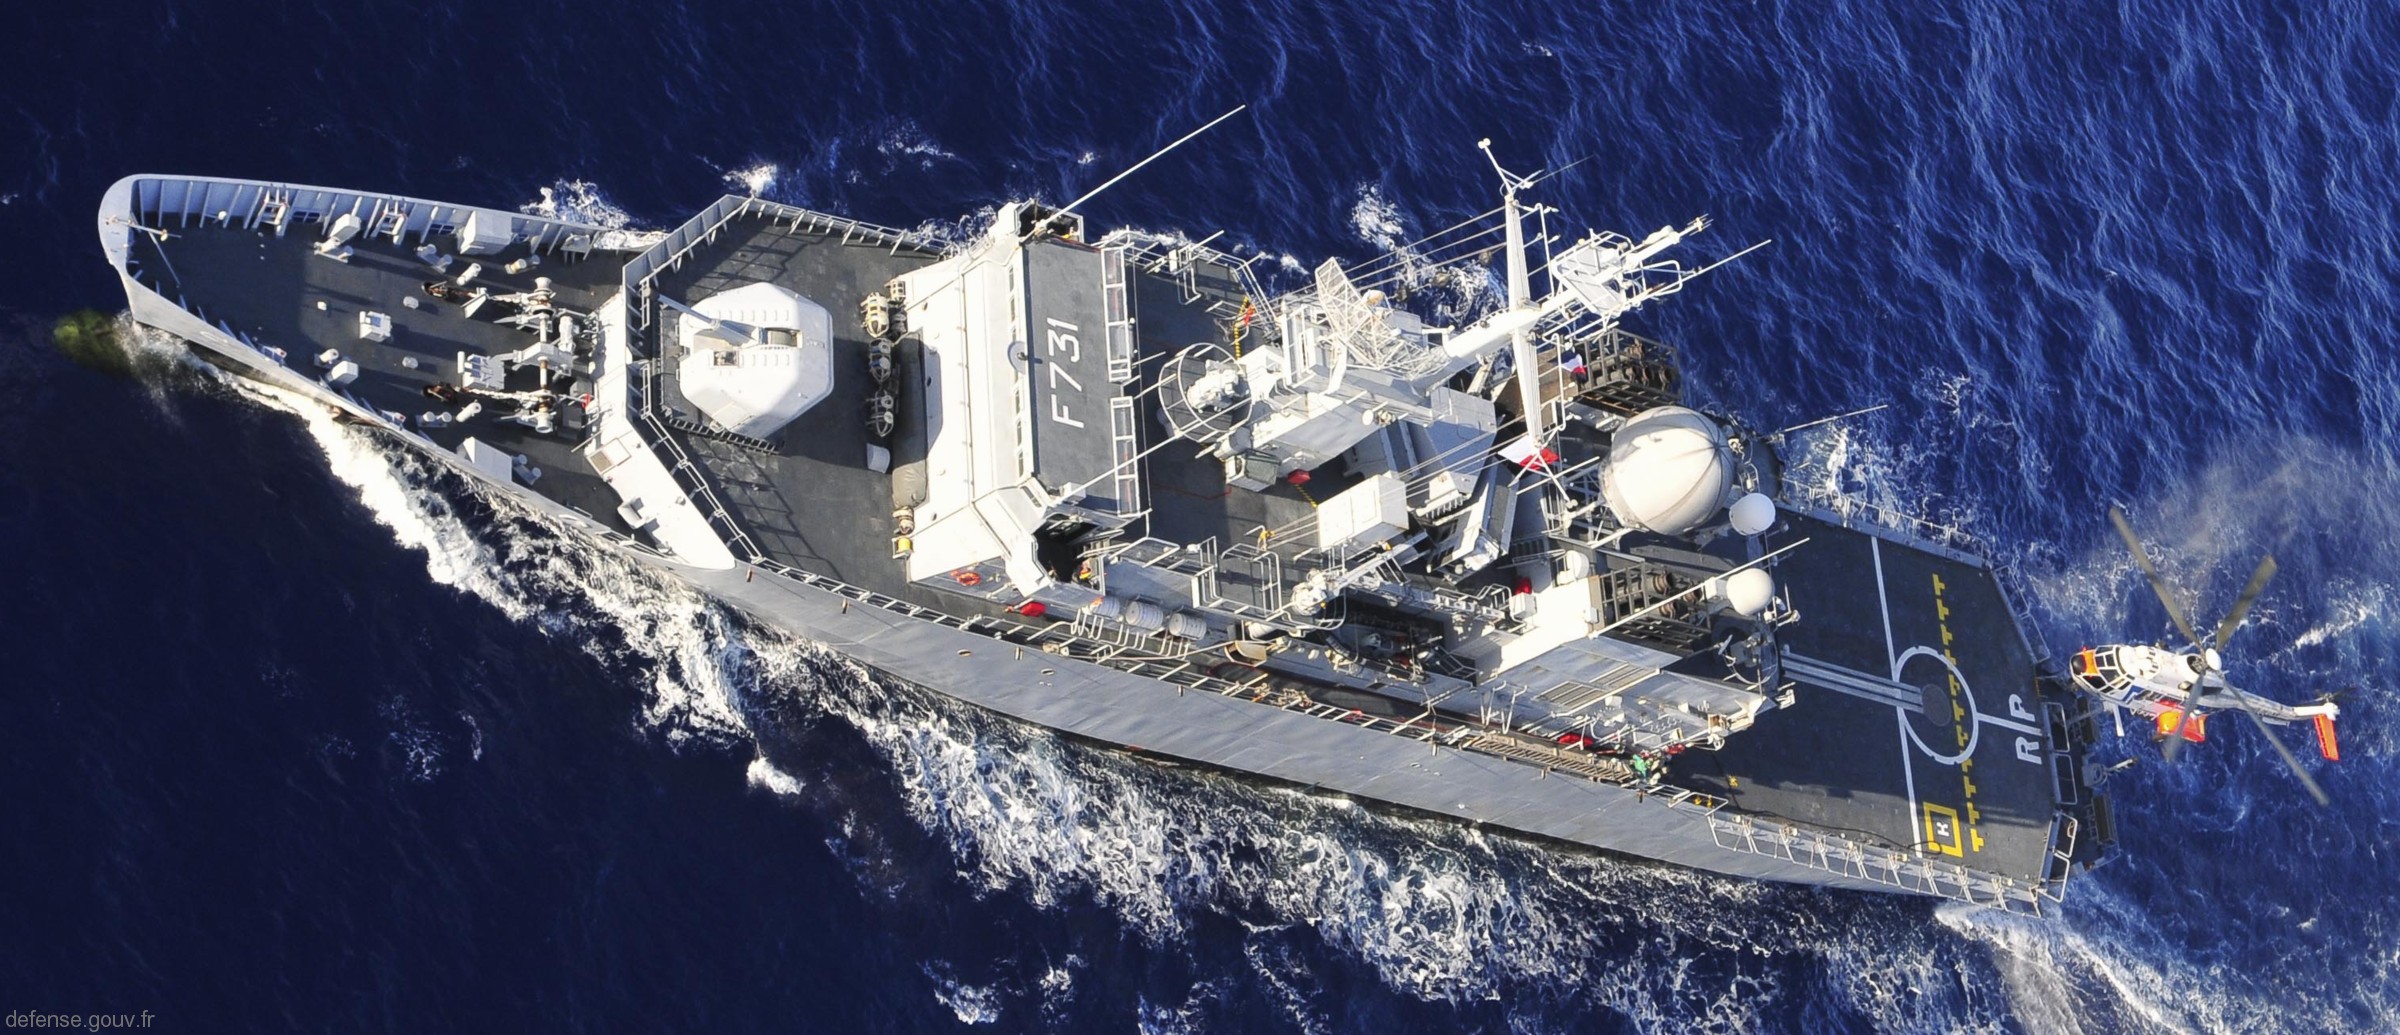 f-731 fs prairial floreal class frigate french navy marine nationale fregate surveillance 21